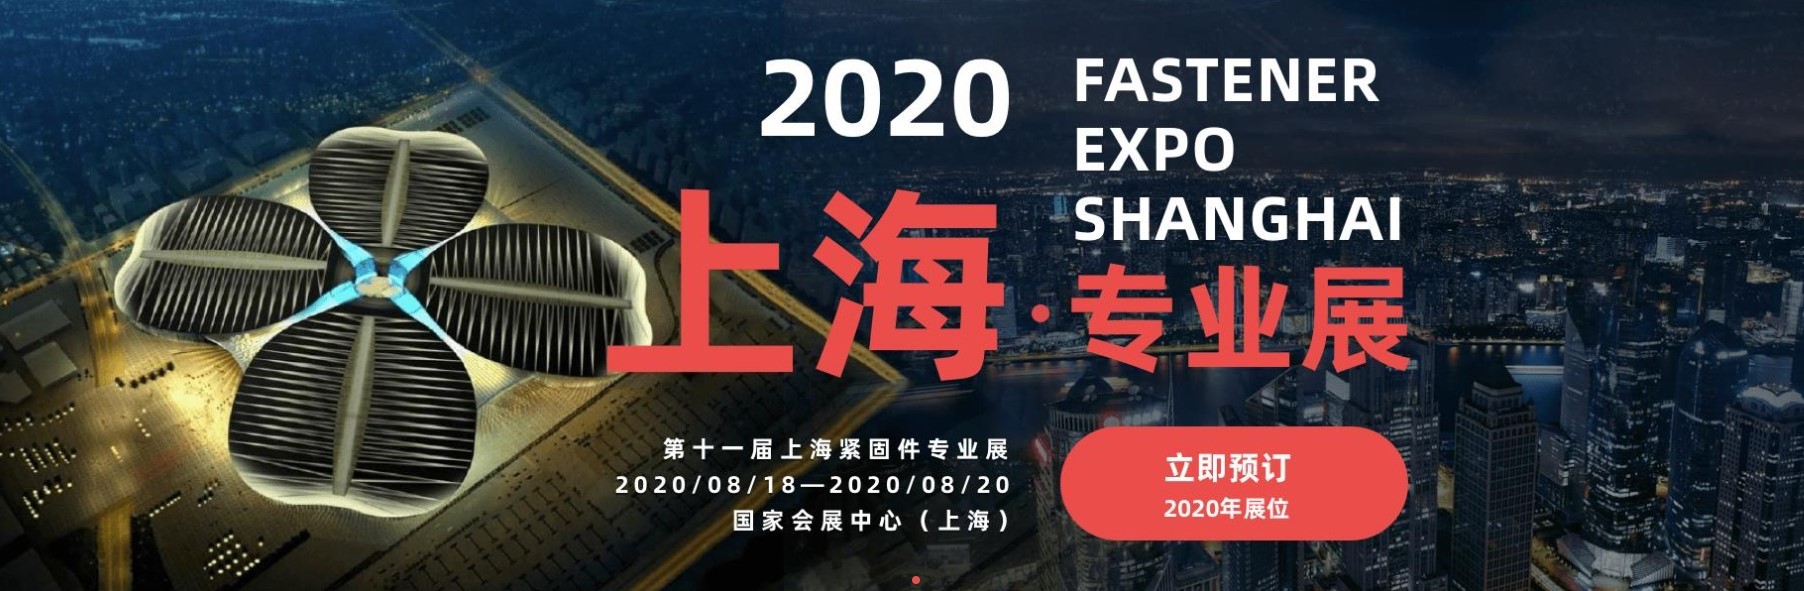 2020 Fastener Expo Shanghai